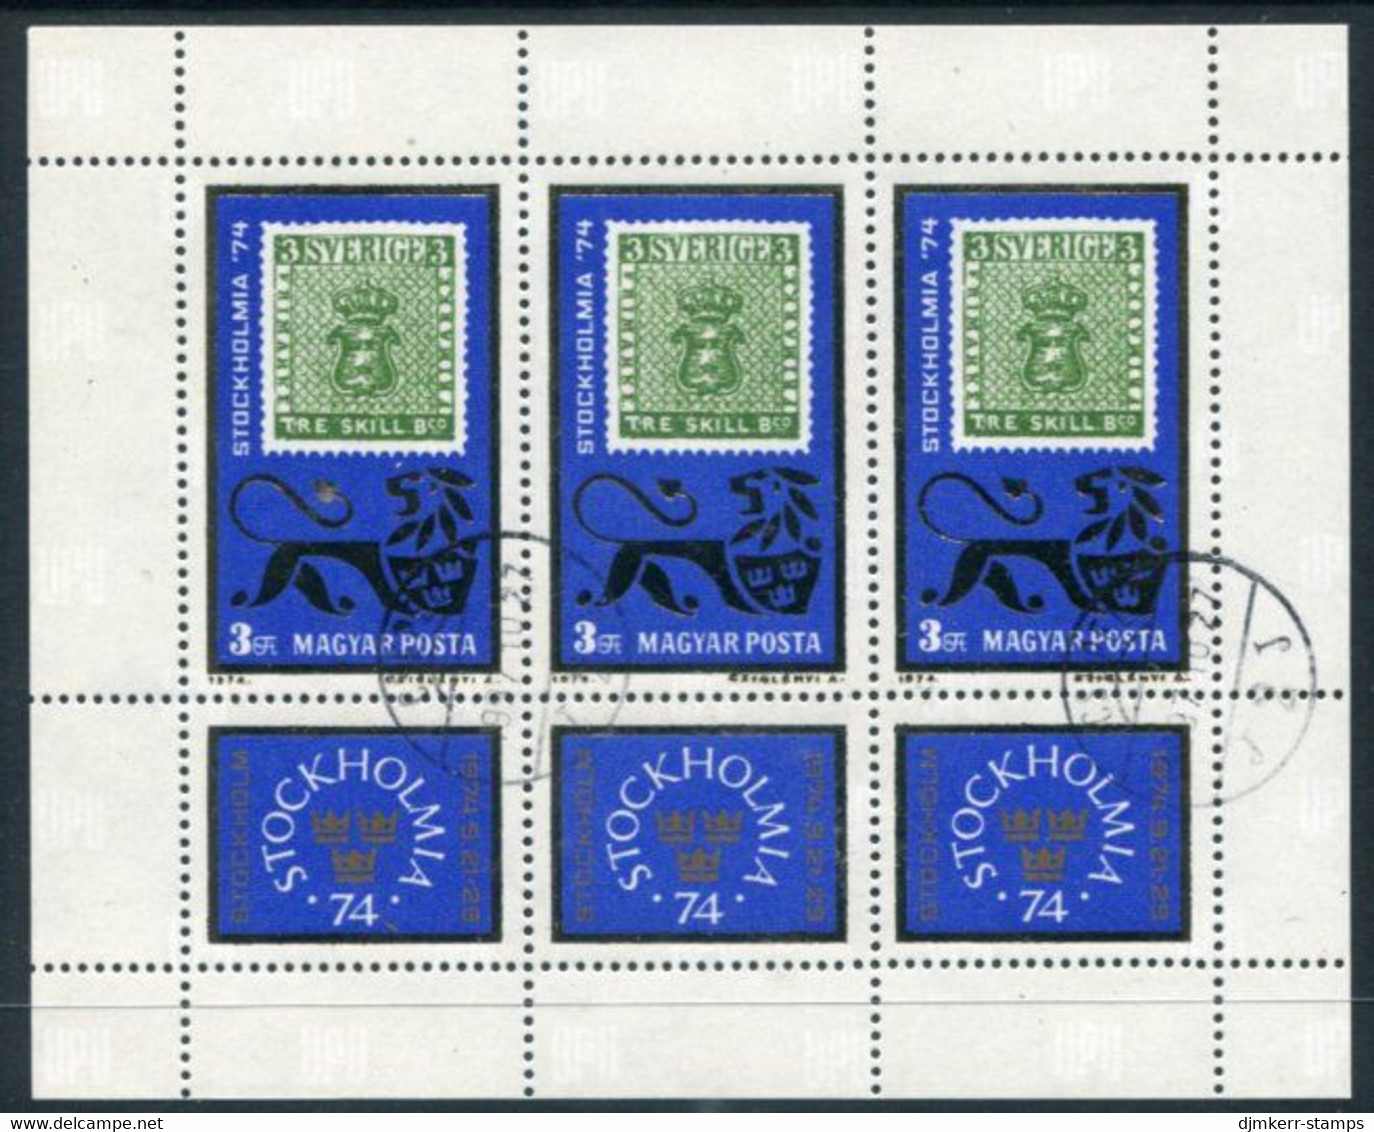 HUNGARY 1974 STOCKHOLMIA Stamp Exhibition Sheetlet Used.  Michel 2981 Kb - Usado